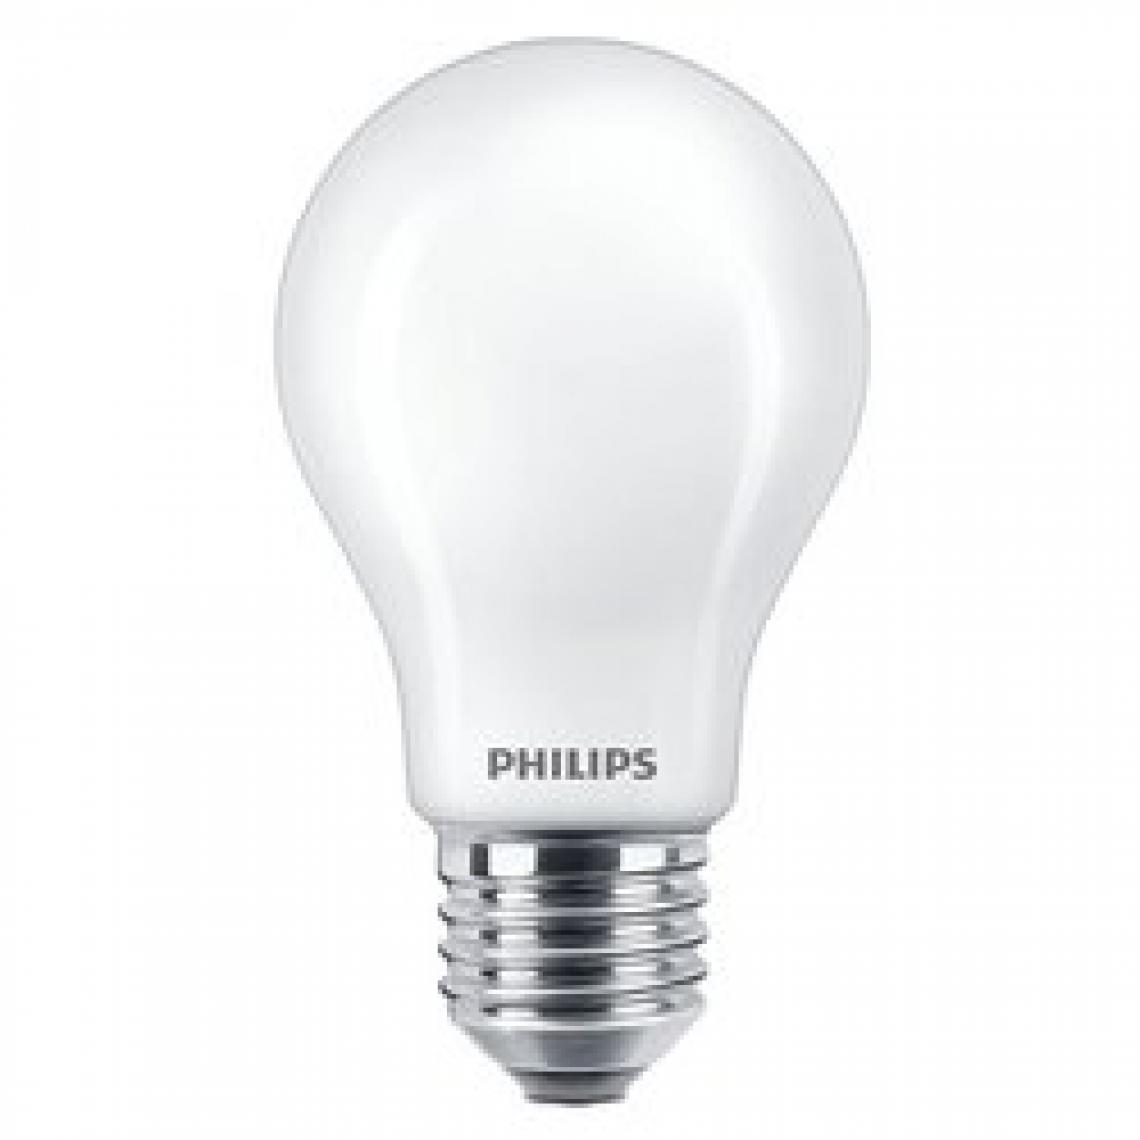 Philips - Ampoule LED E27 verre PHILIPS forme standard EQ60W - Ampoules LED